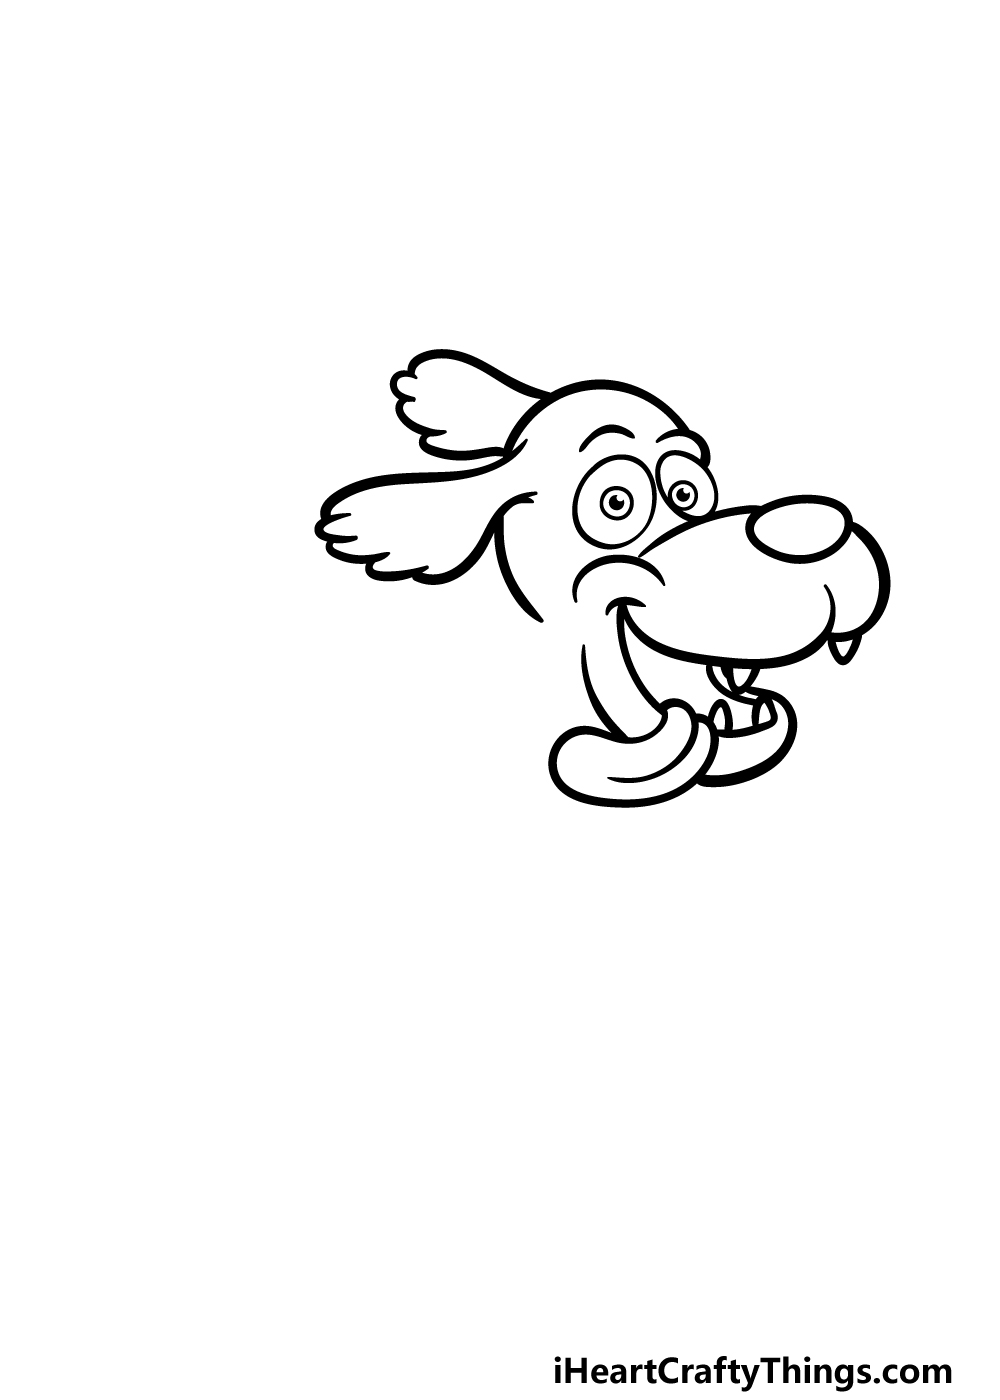 Cartoon Dog Drawing - How To Draw A Cartoon Dog Step By Step